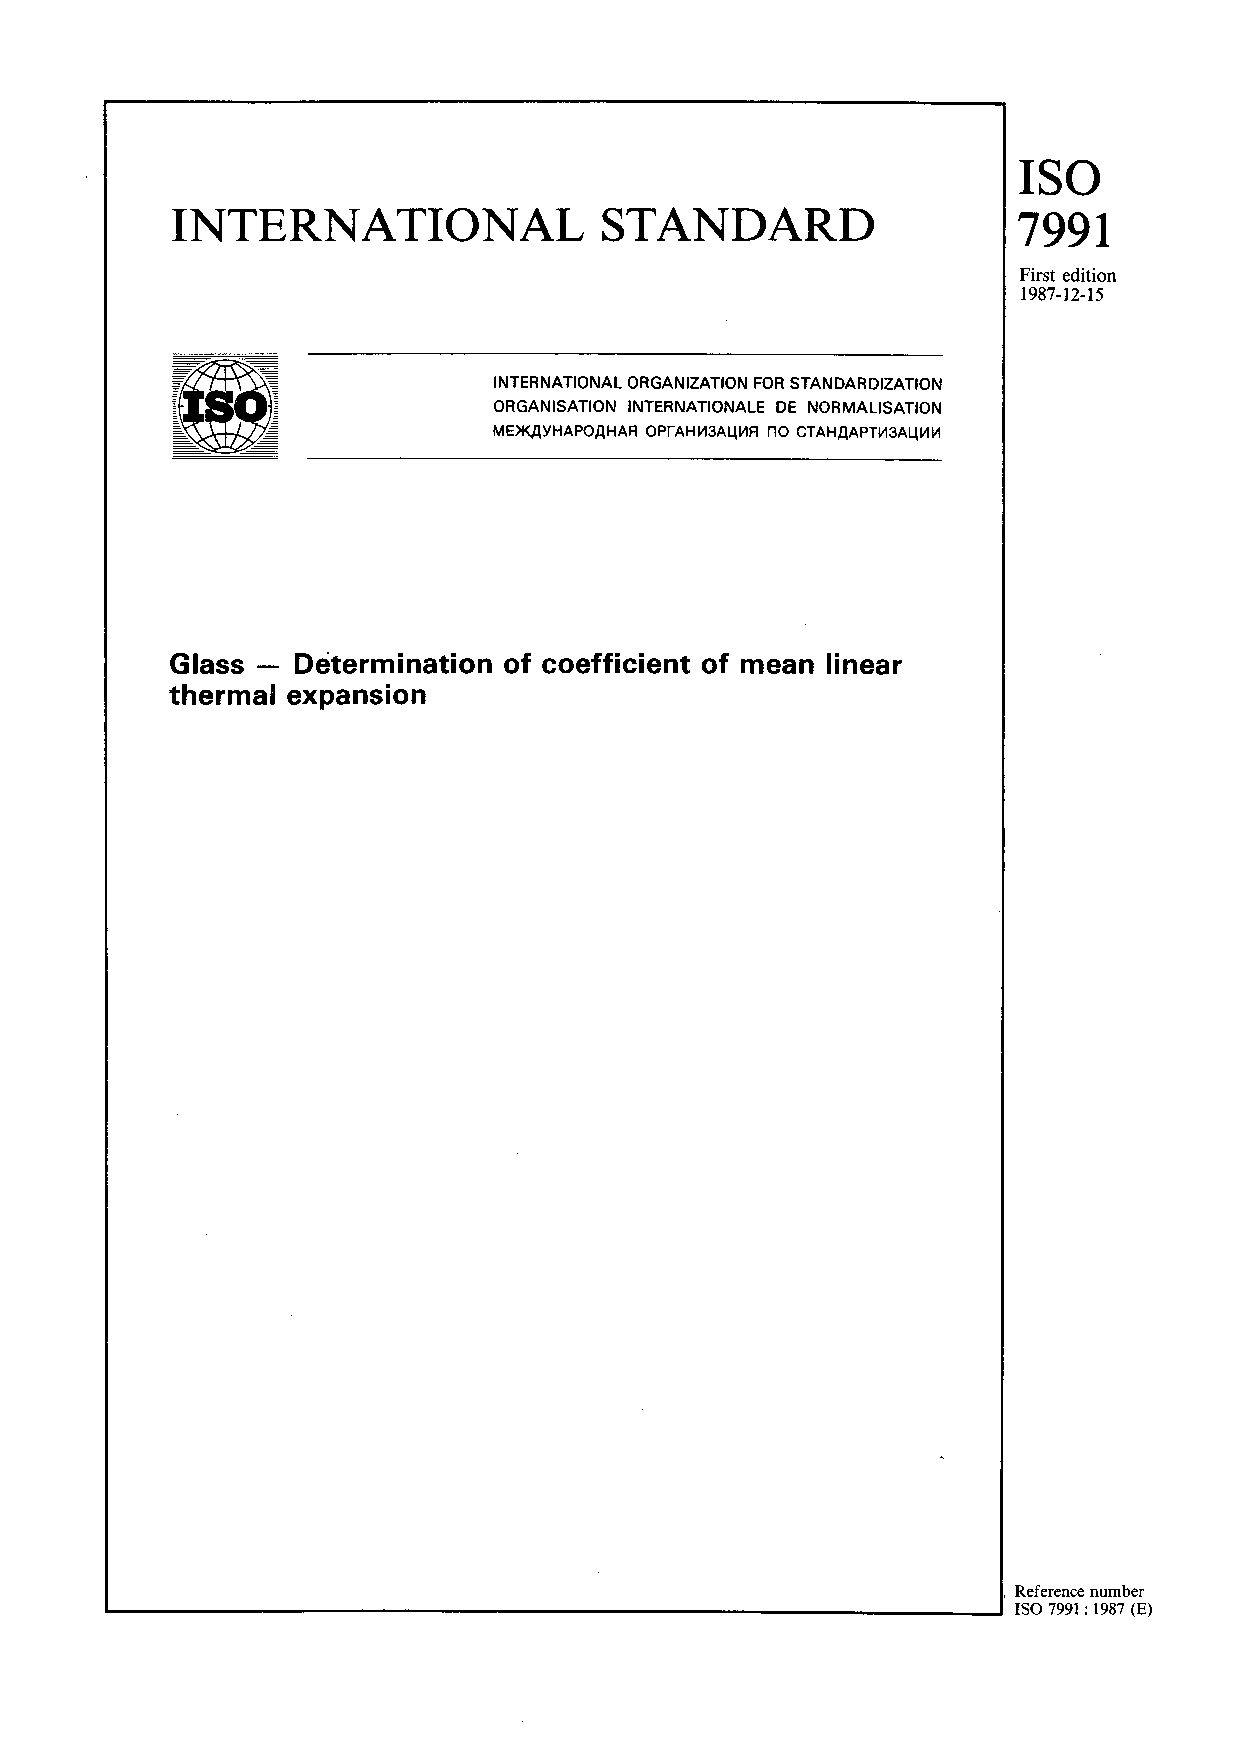 ISO 7991:1987封面图